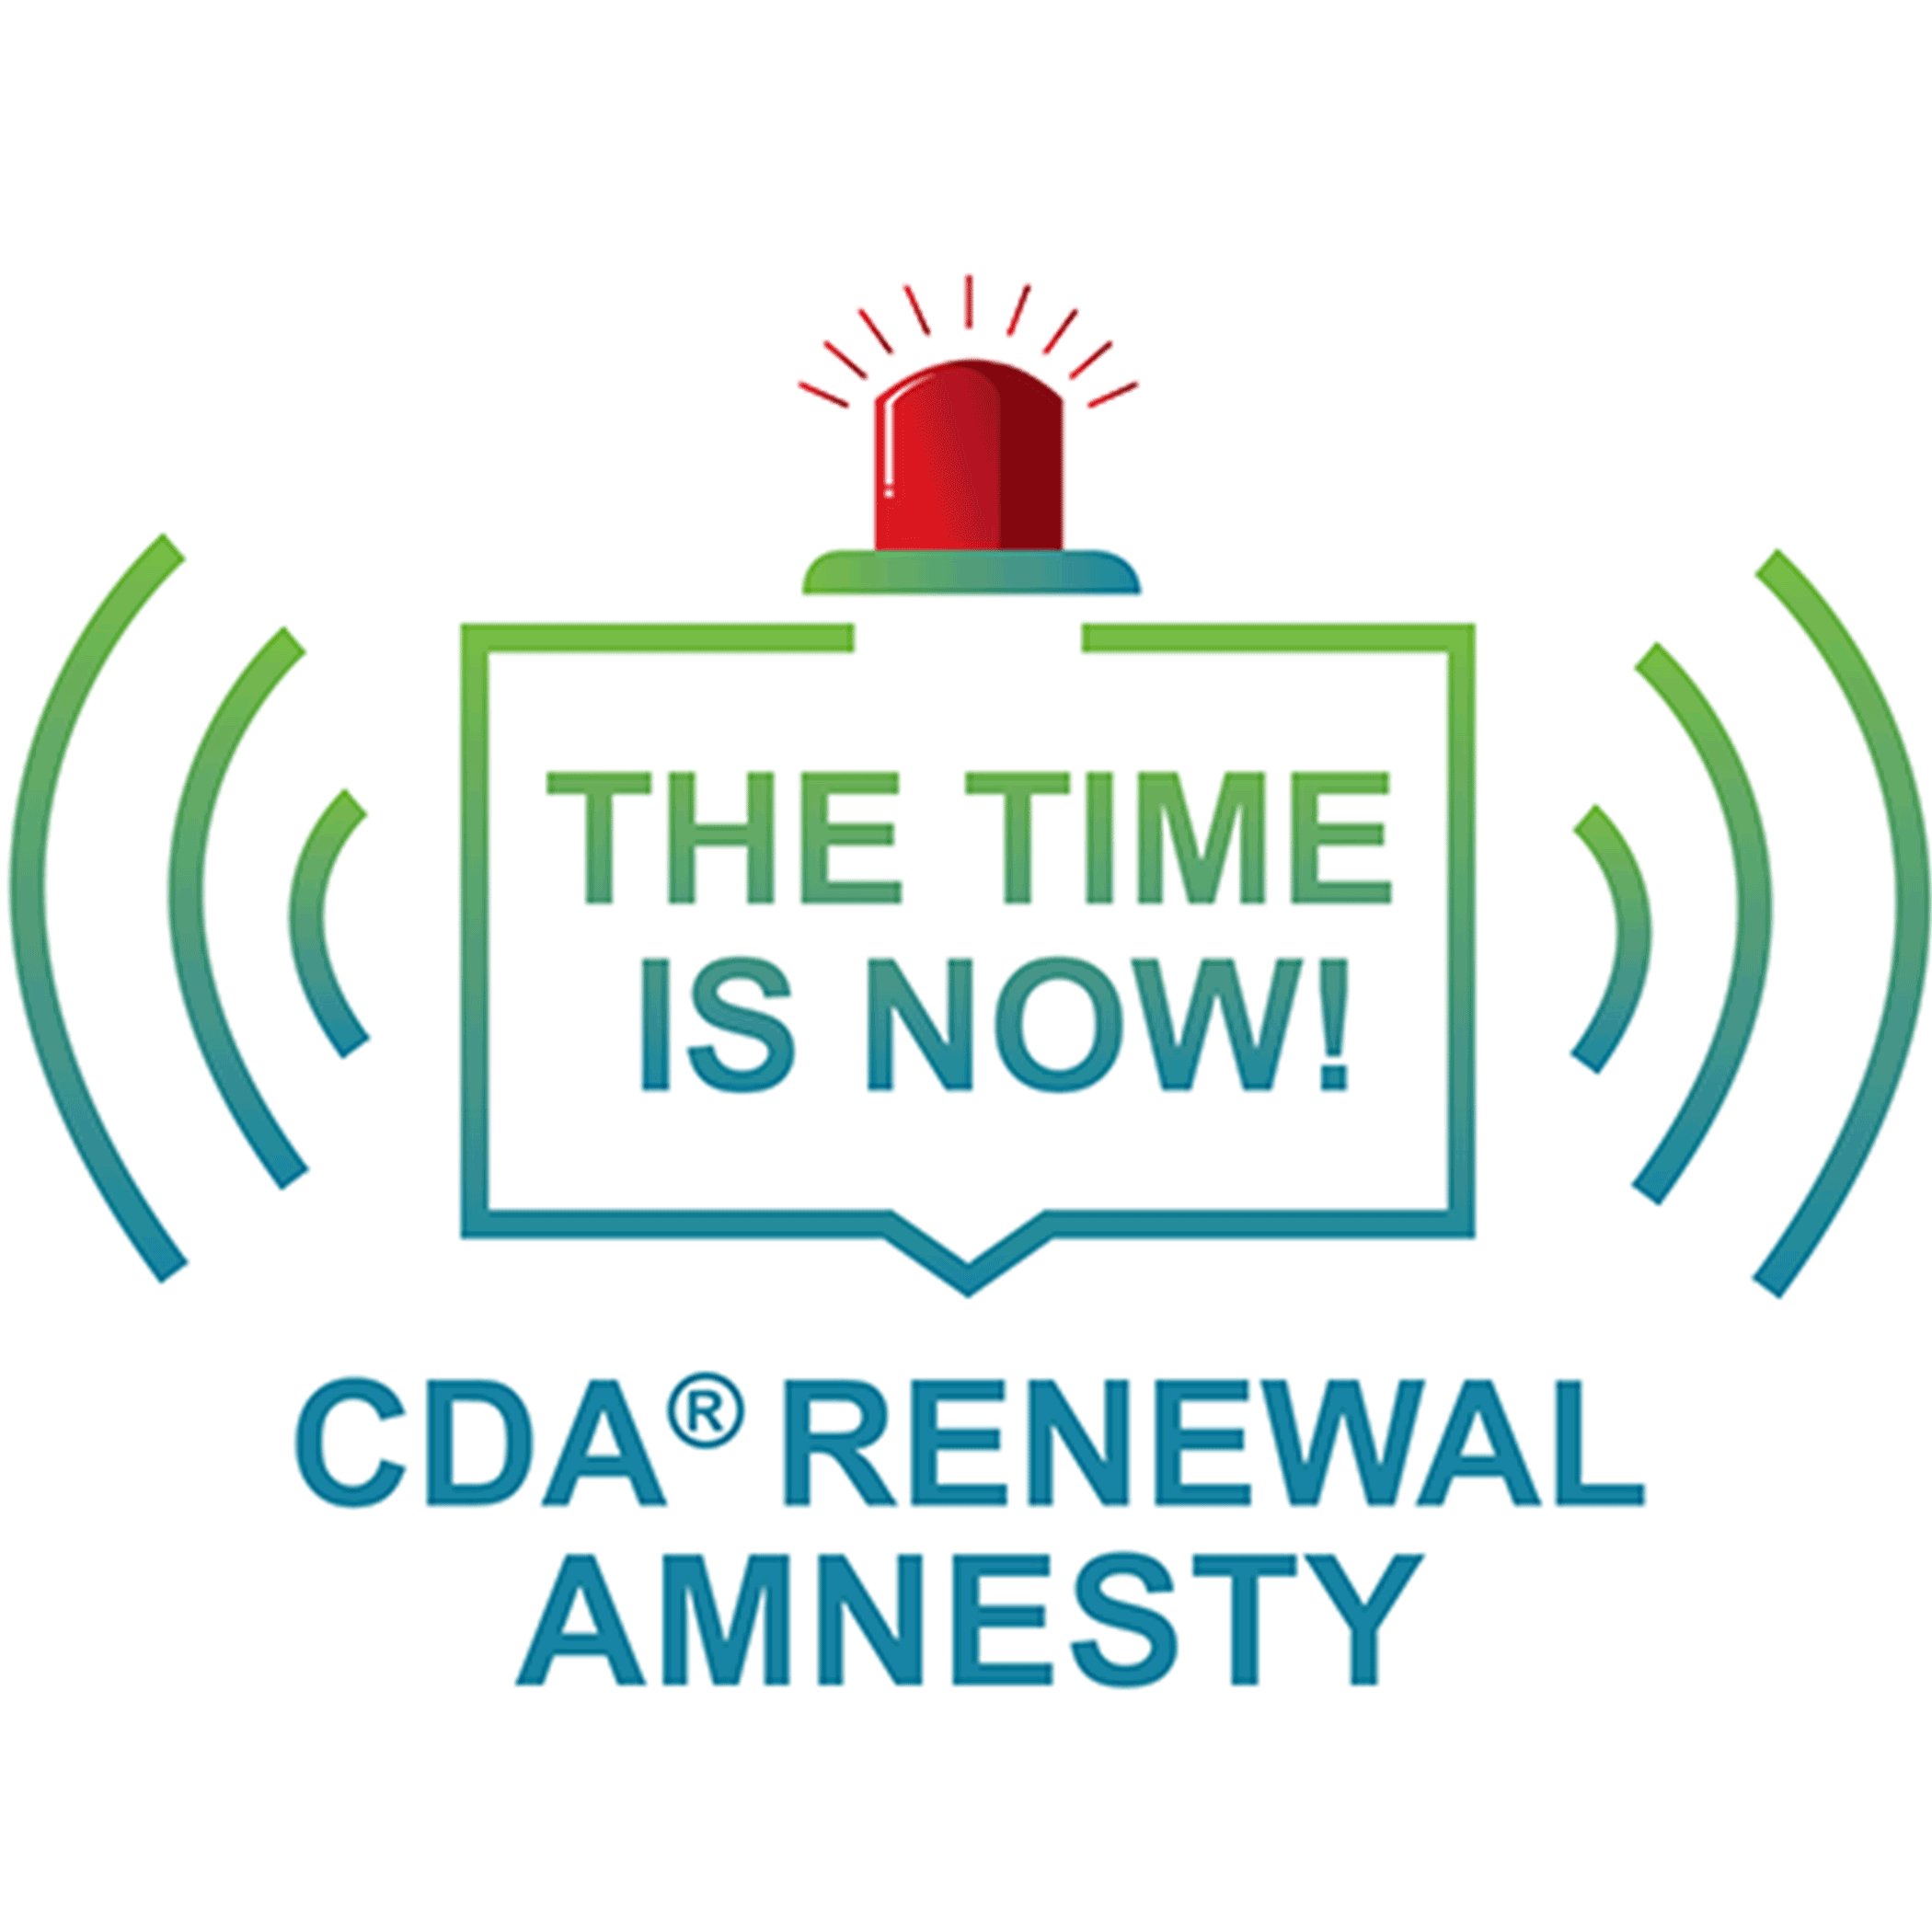 CDA Renewal Amnesty Program Get a Fresh Start Council for